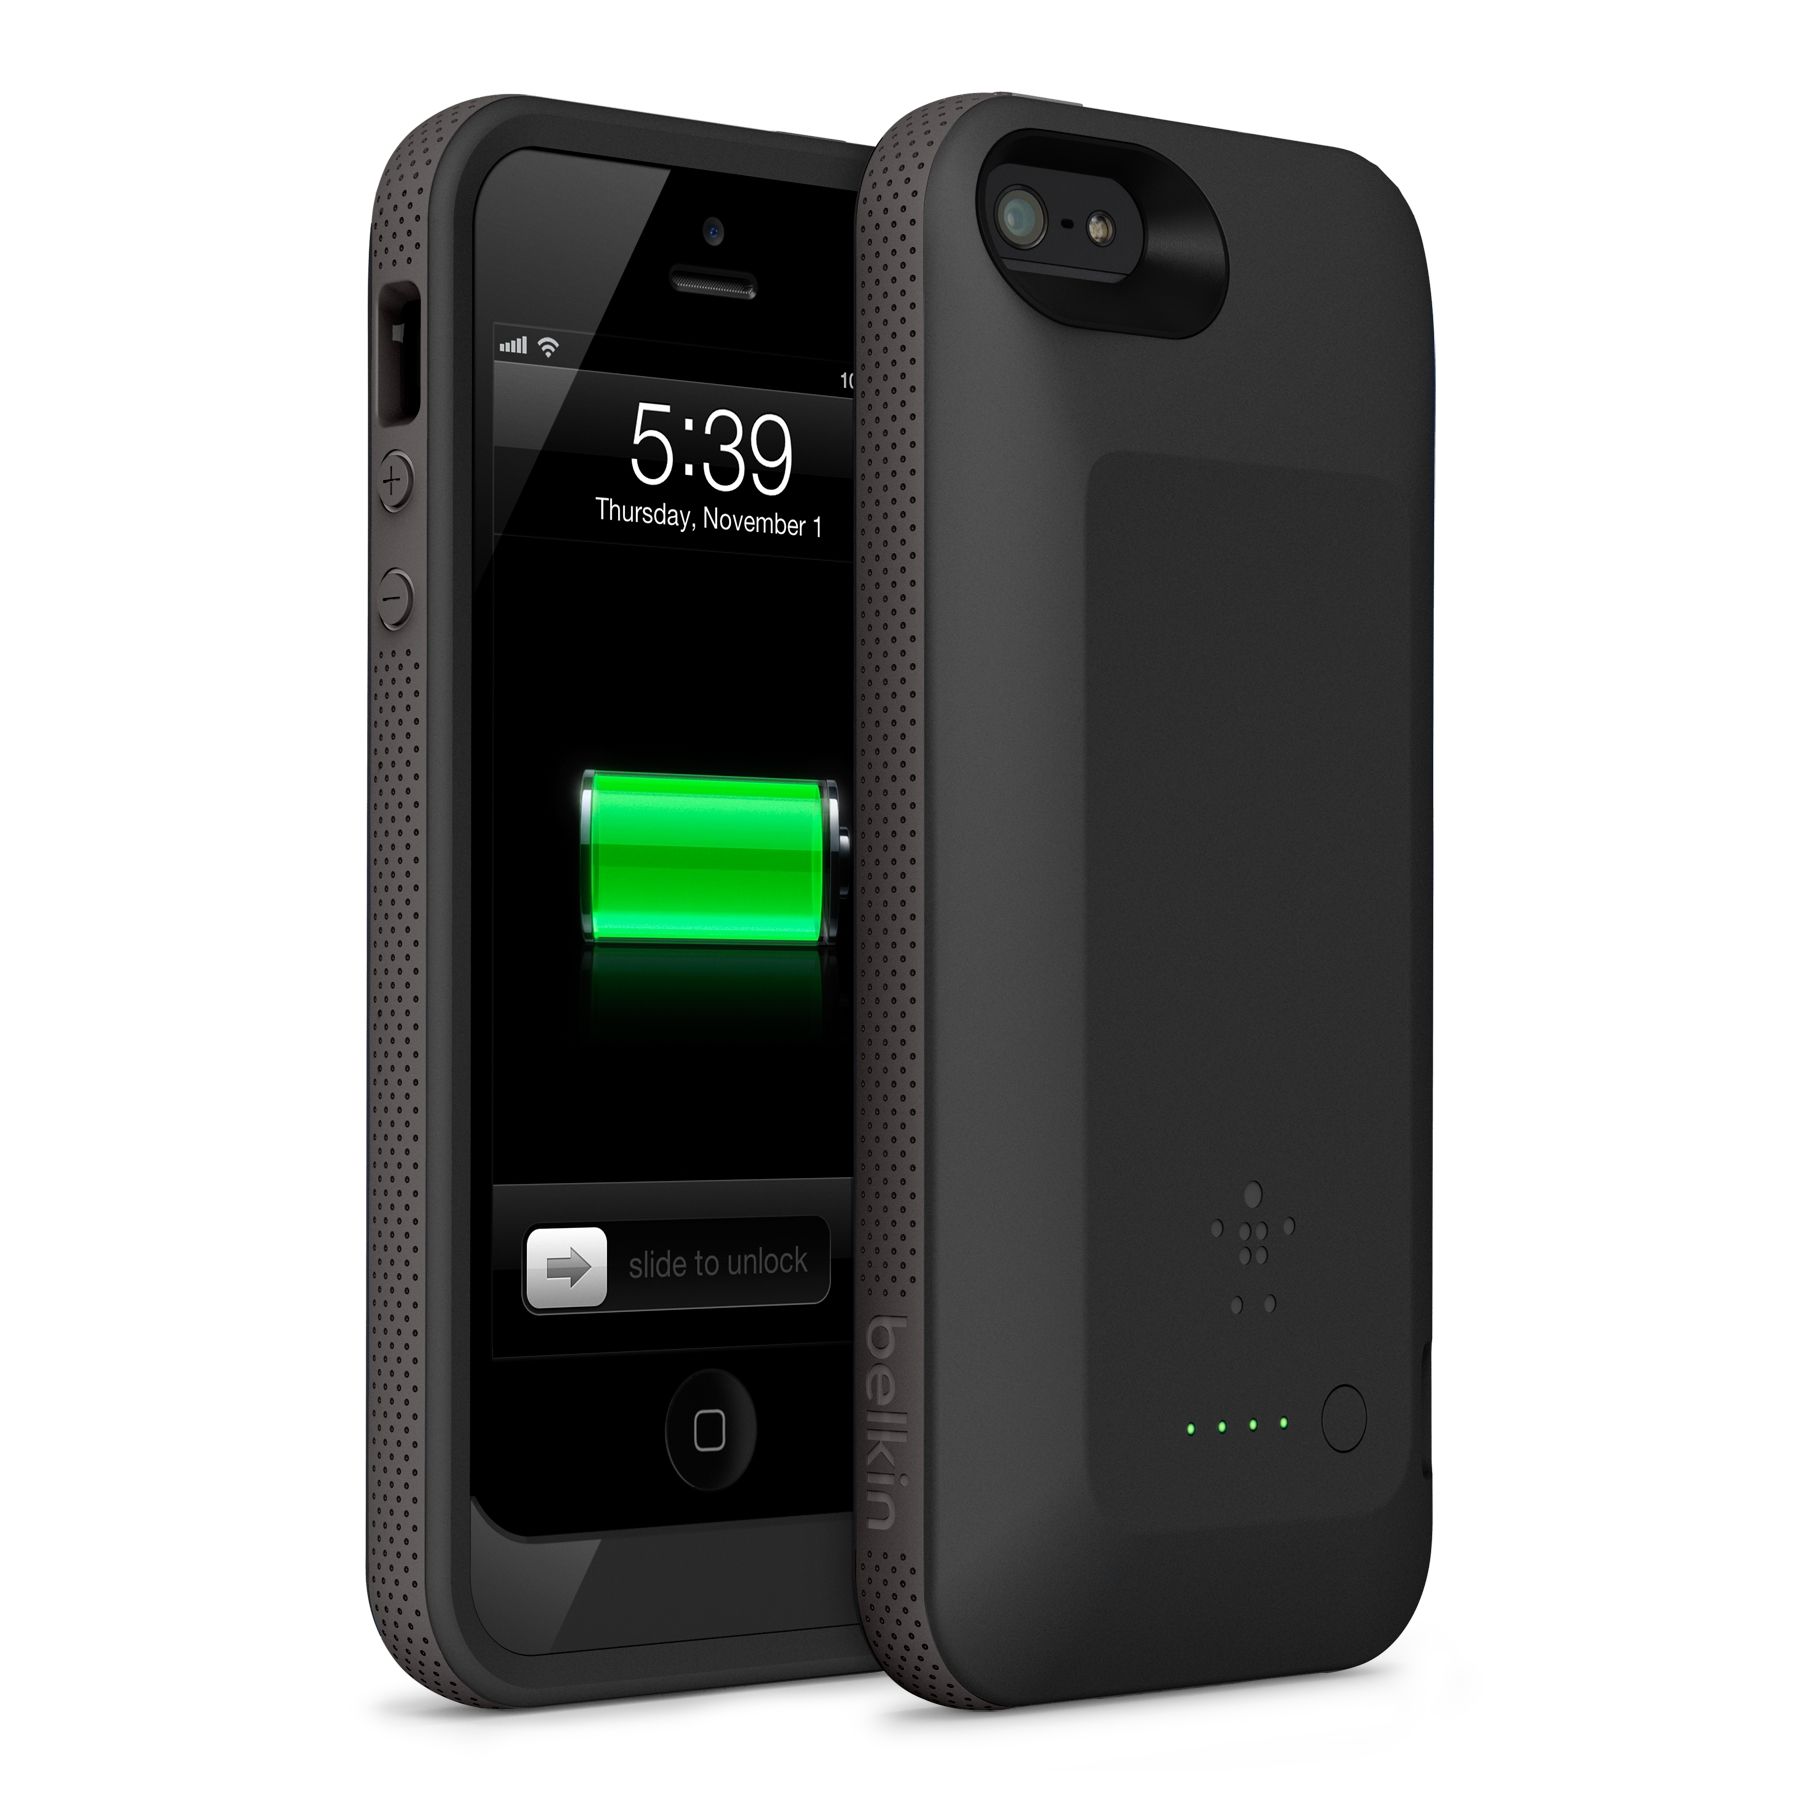 belkin s grip power battery case doubles iphone 5 battery life image 1